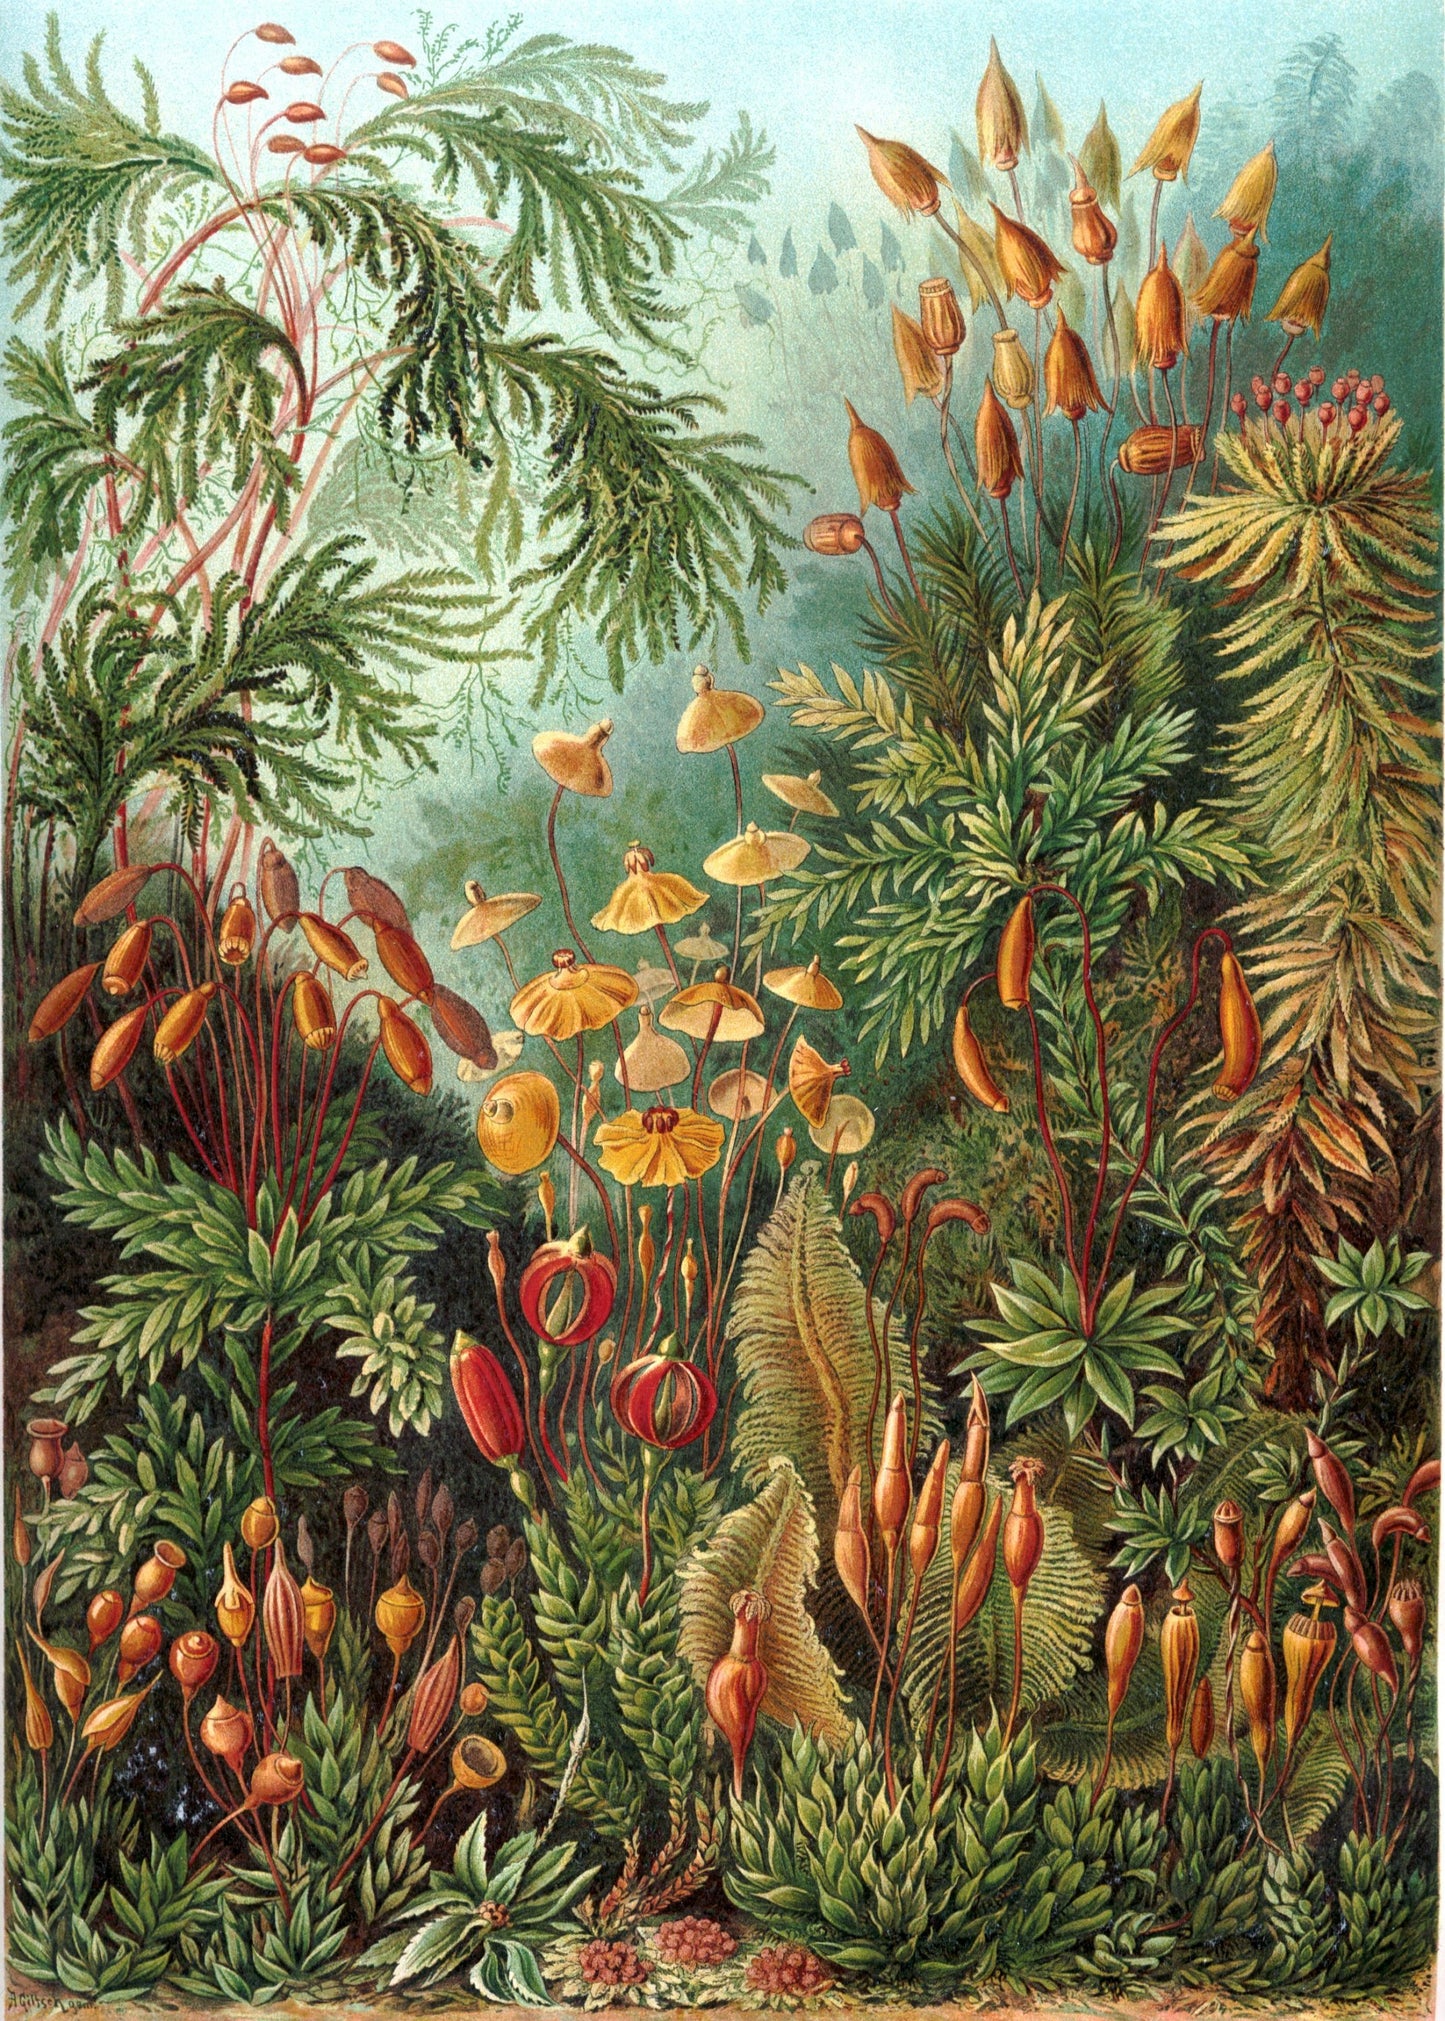 XXL Mushroom Forest Botanical Print by Ernst Haeckel